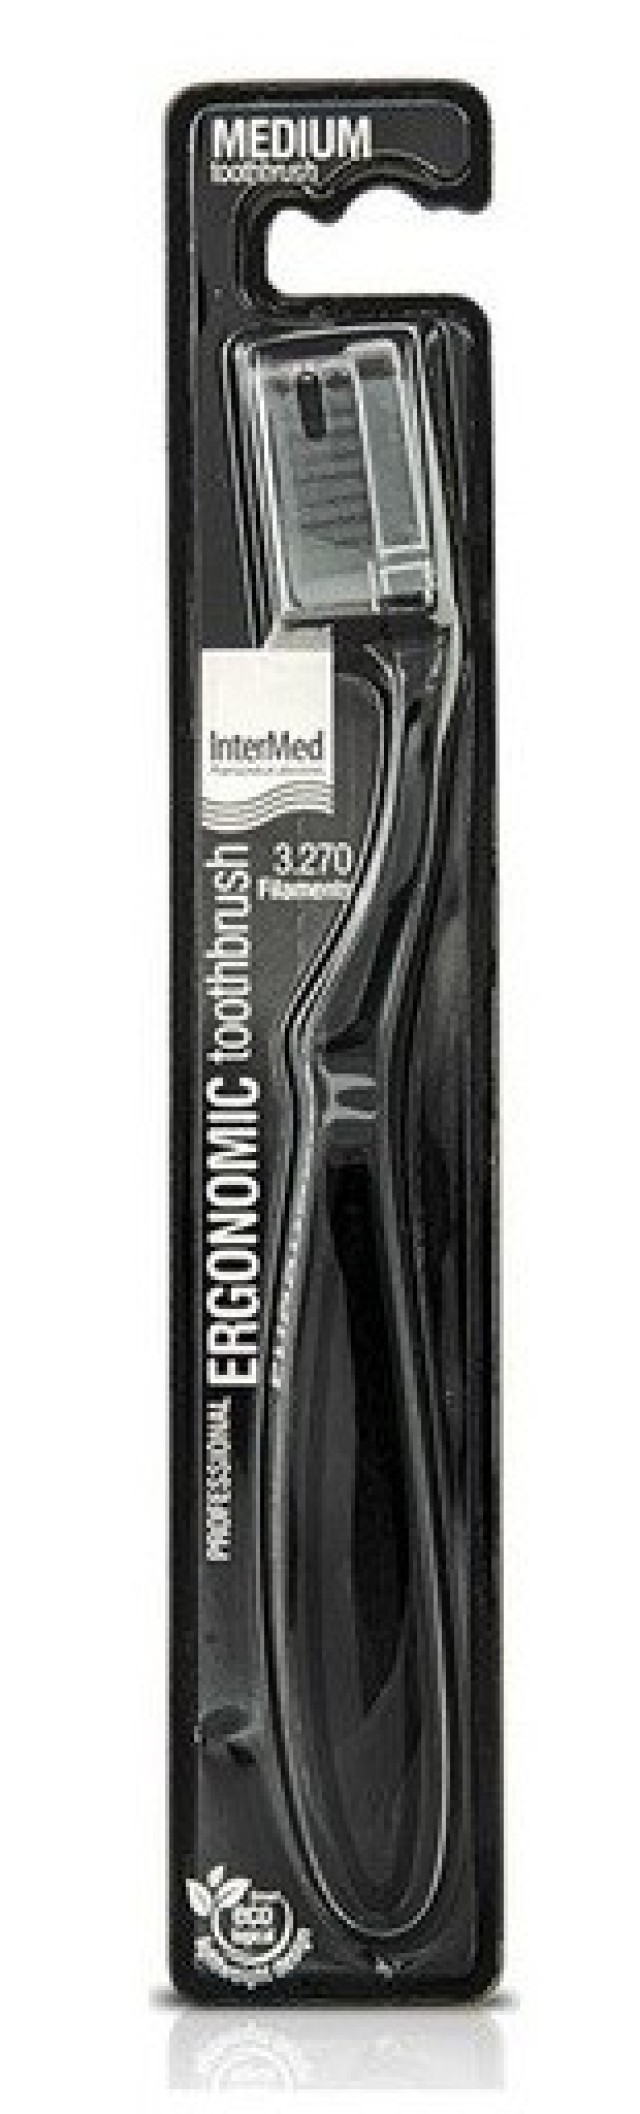 Intermed Professional Ergonomic Toothbrush Medium Οδοντόβουρτσα Μαύρη 3.270 Ίνες